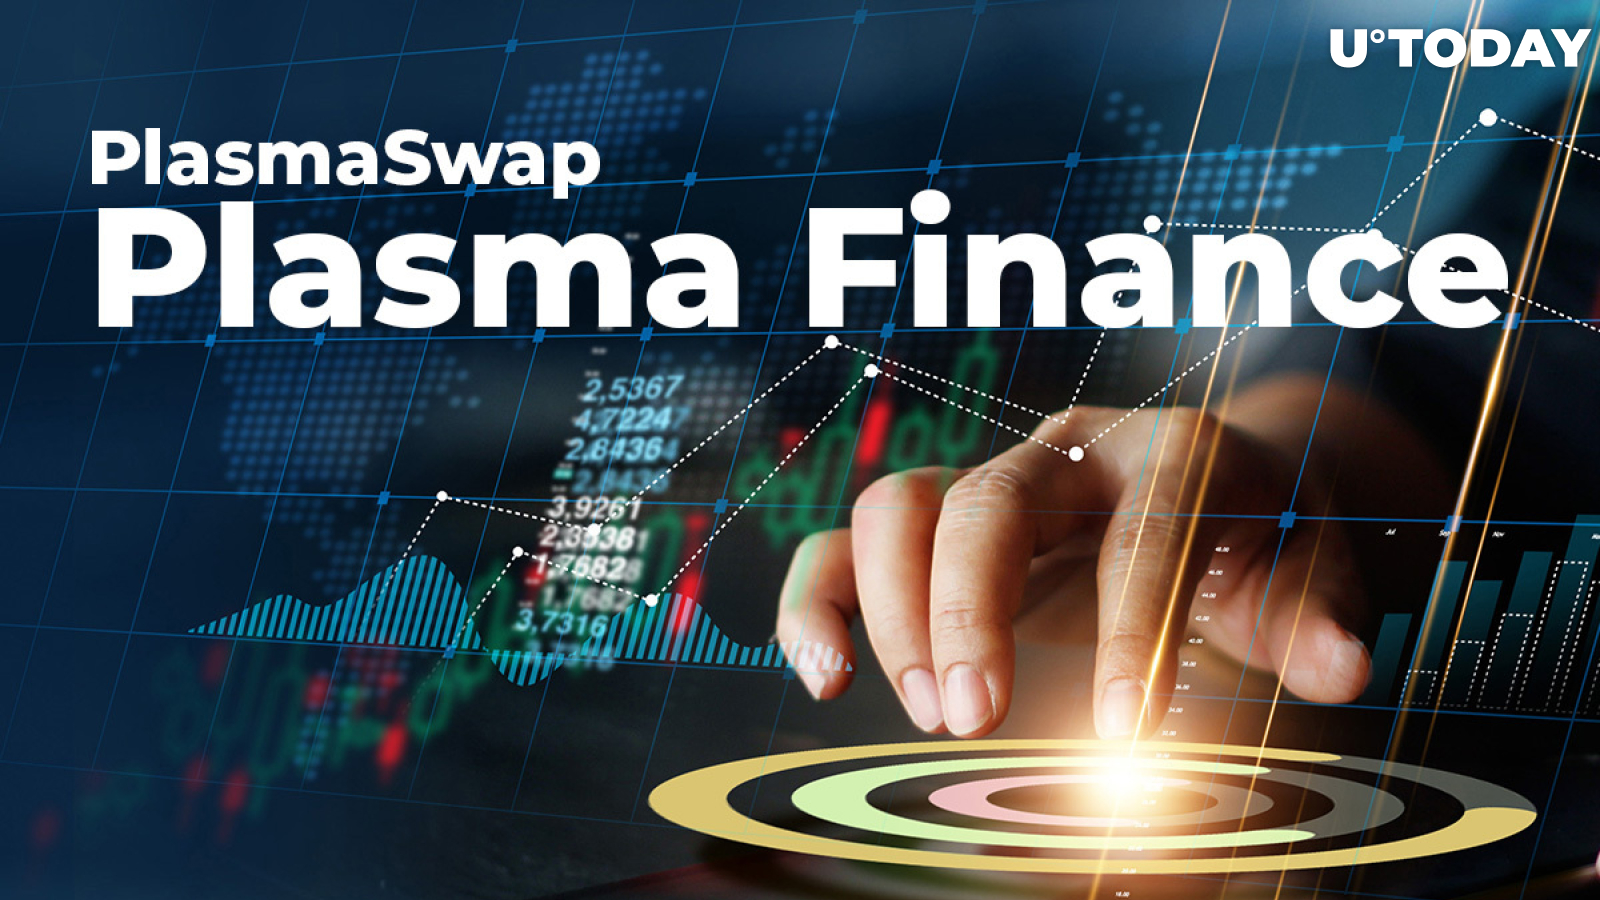 PlasmaSwap by Plasma Finance Now Has Limit Orders: Details